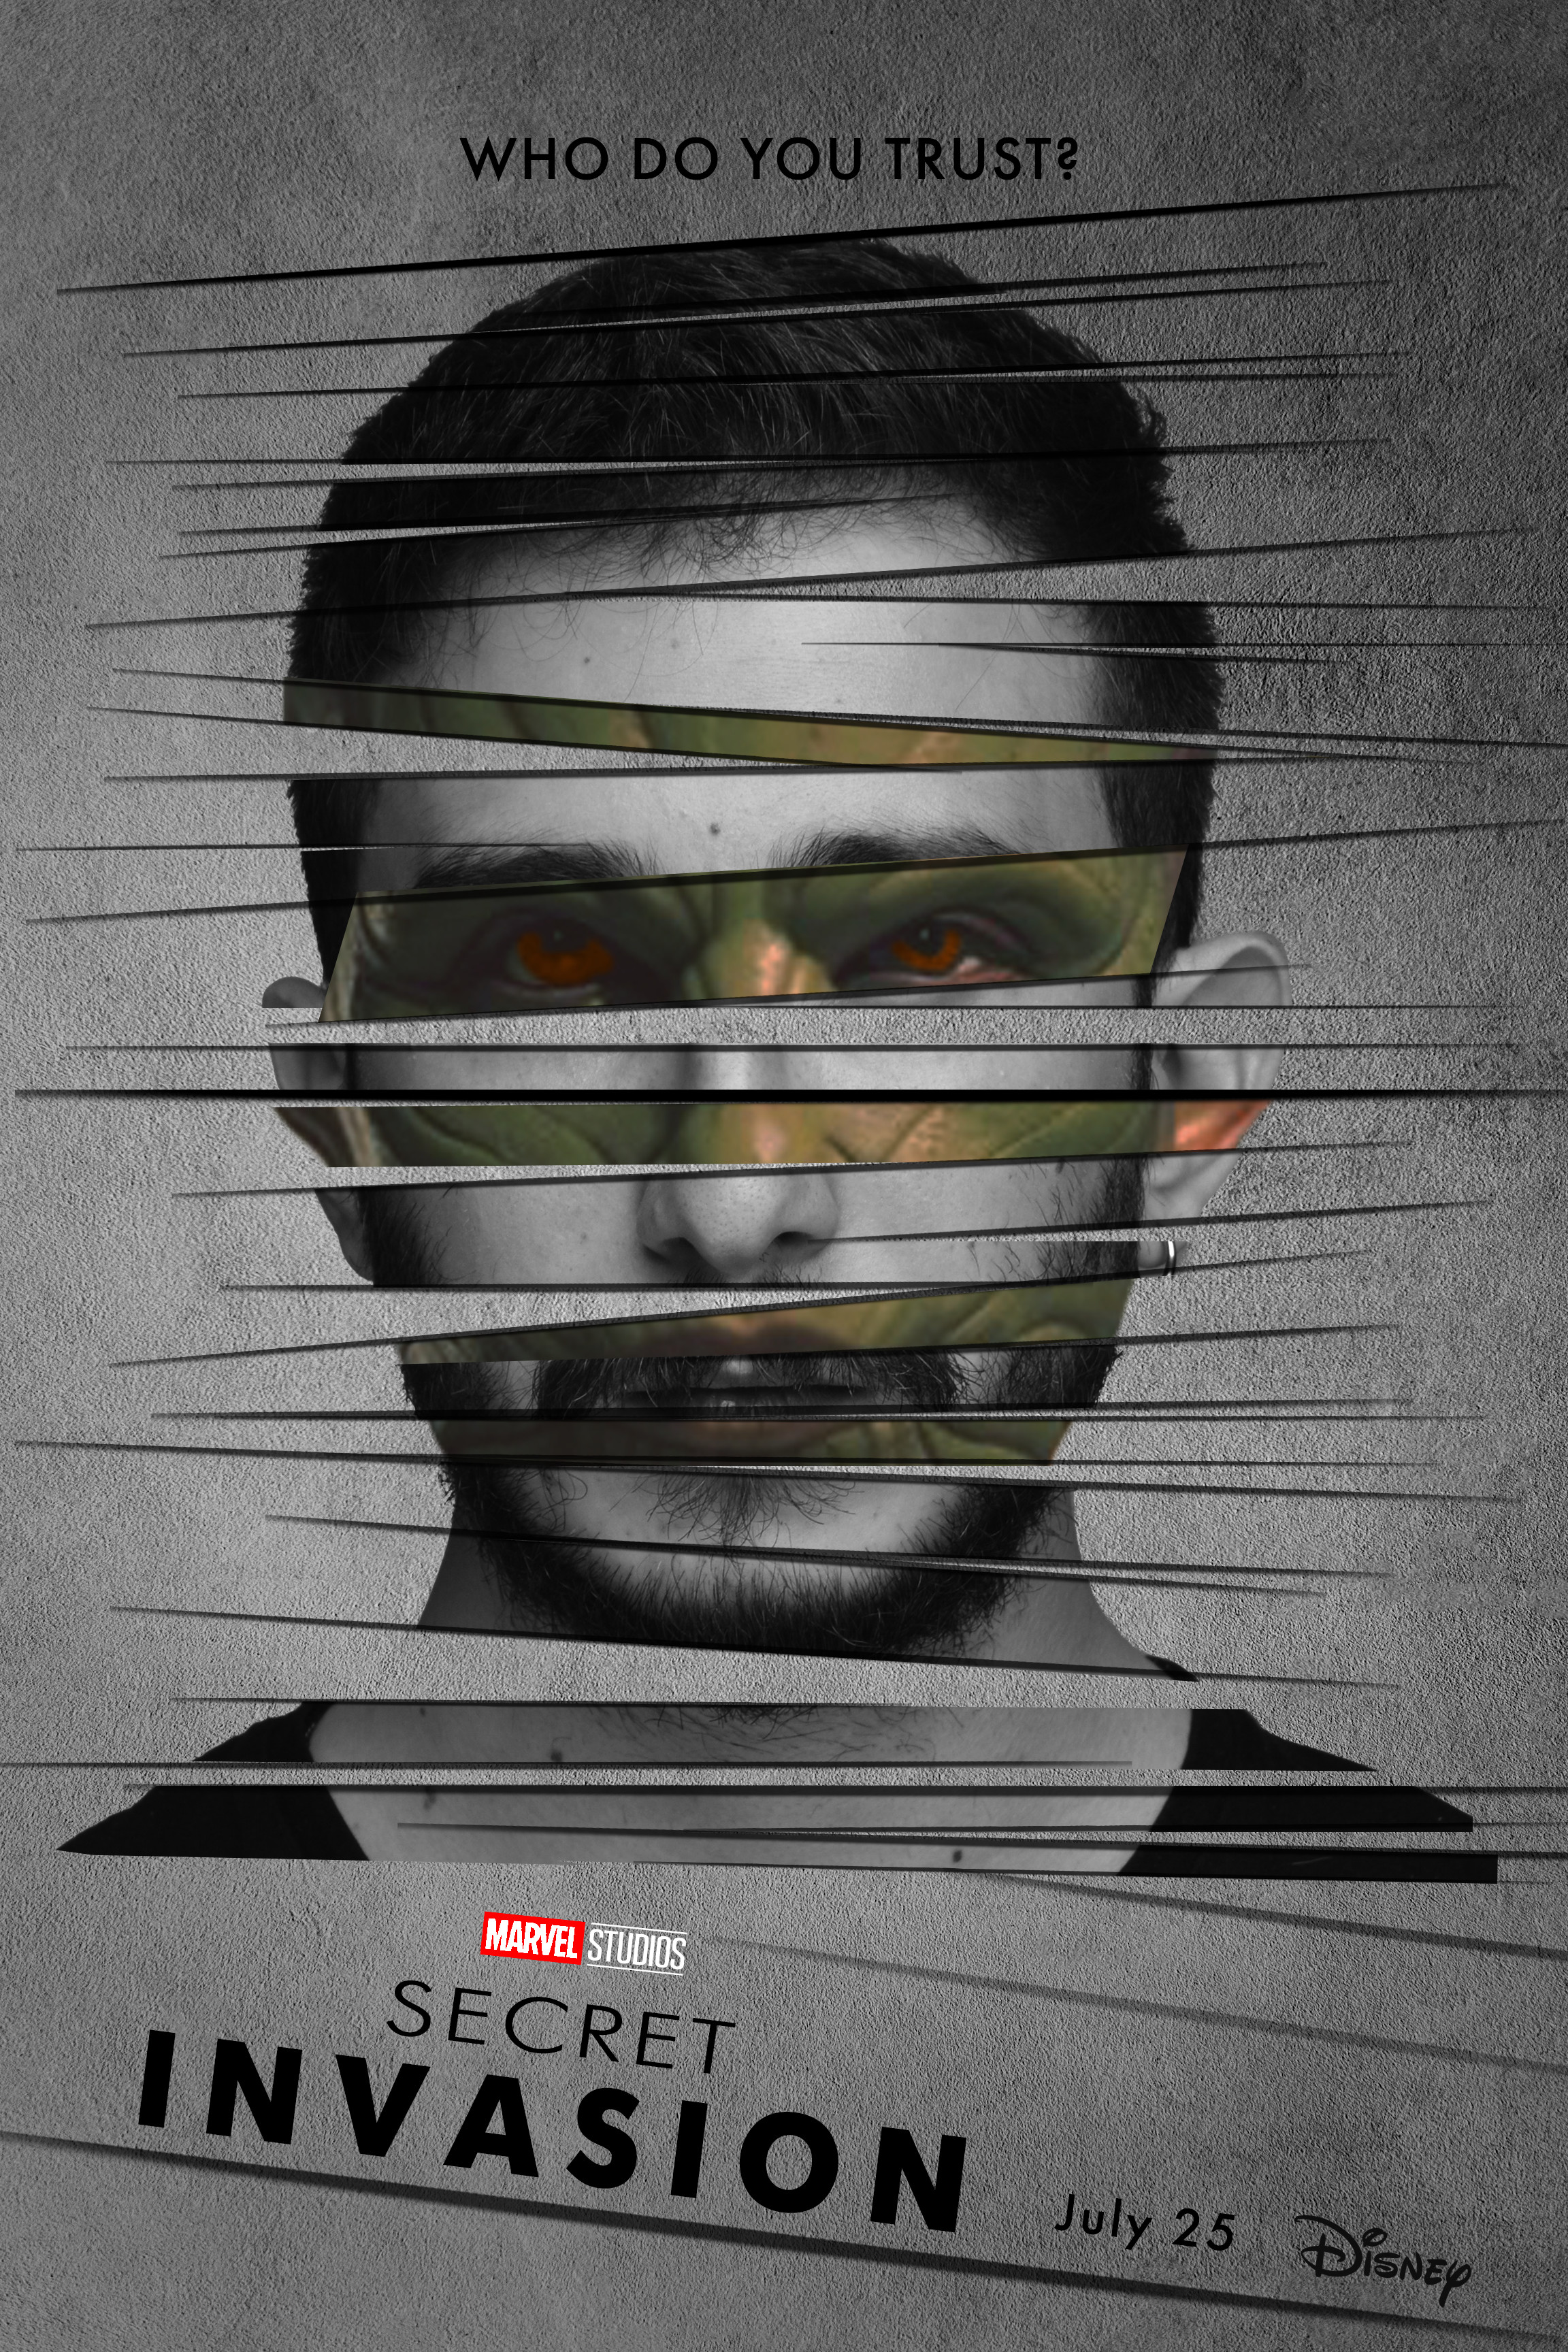 MARVEL STUDIOS' Secret Invasion, Poster Effect Design In Photoshop